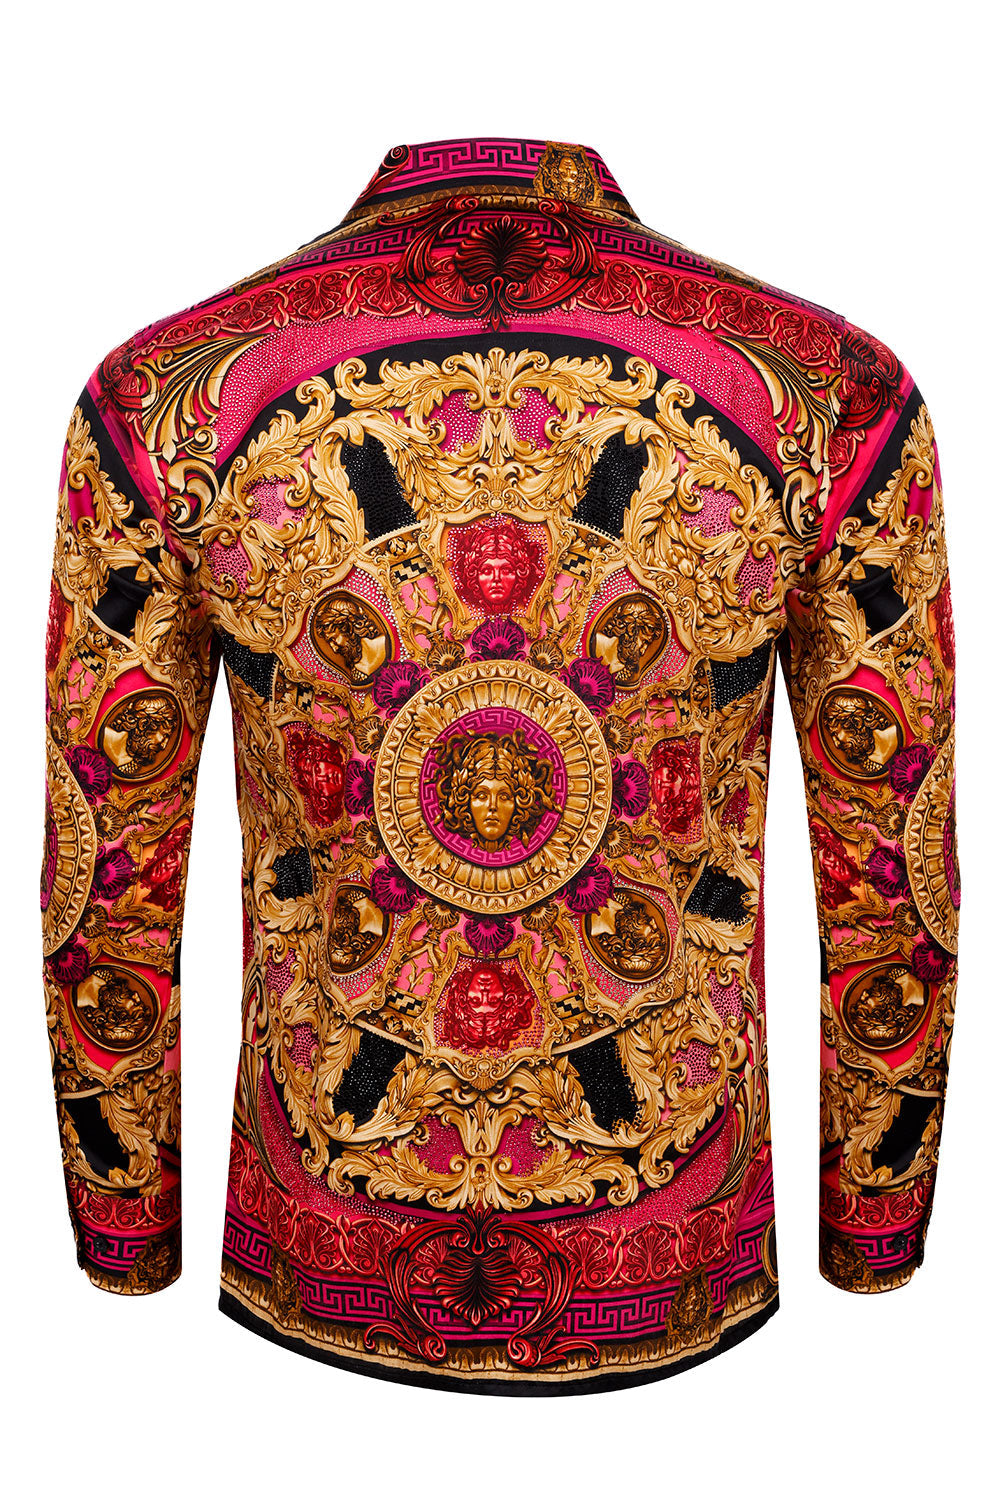 BARABAS Men's Rhinestone Medusa Floral Long Sleeve Shirts 3SPR416 Acid Pink